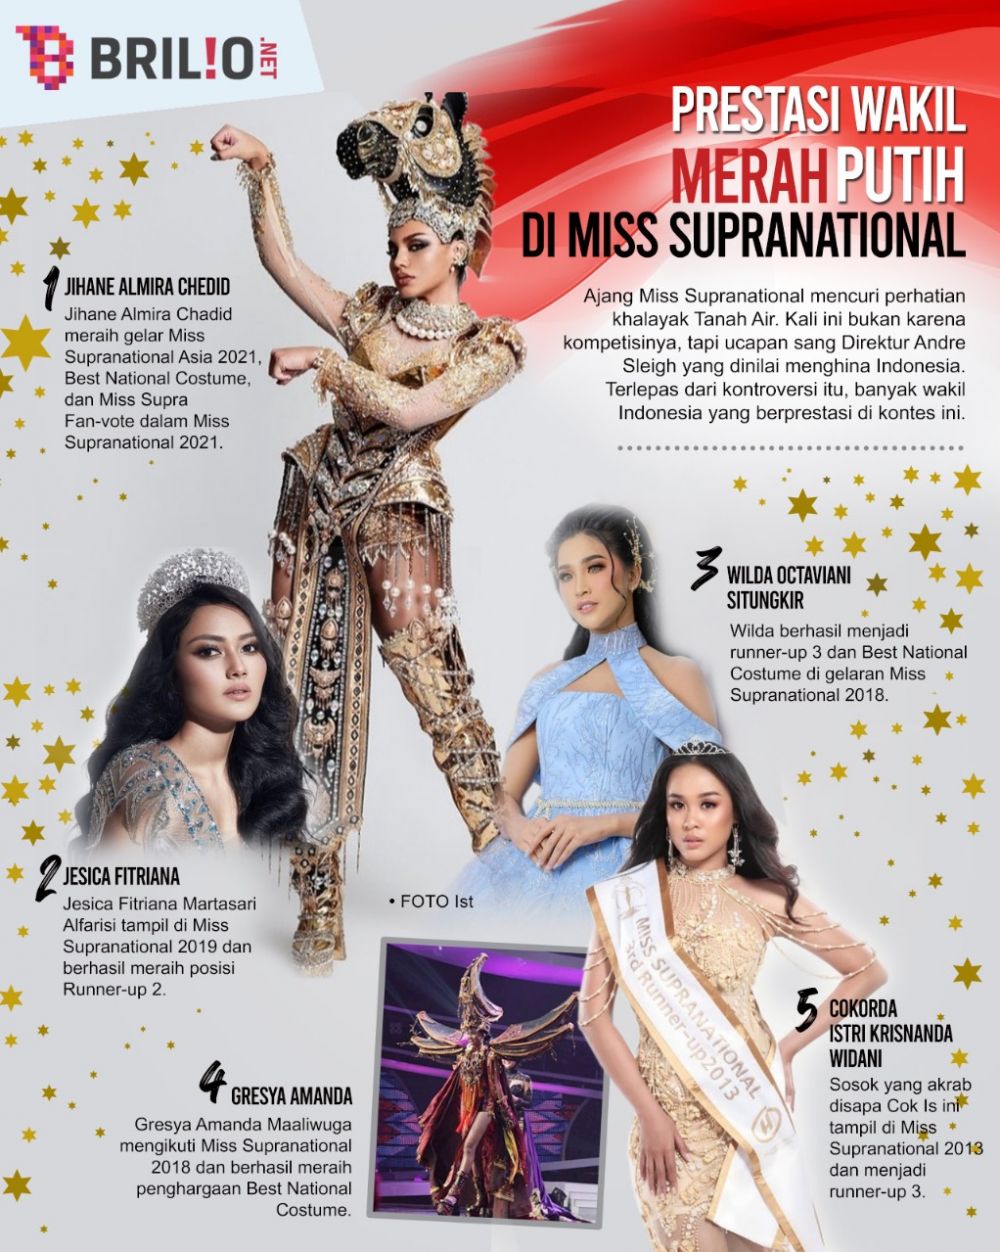 Bikin bangga, 5 wakil Indonesia ini bersinar di Miss Supranational 